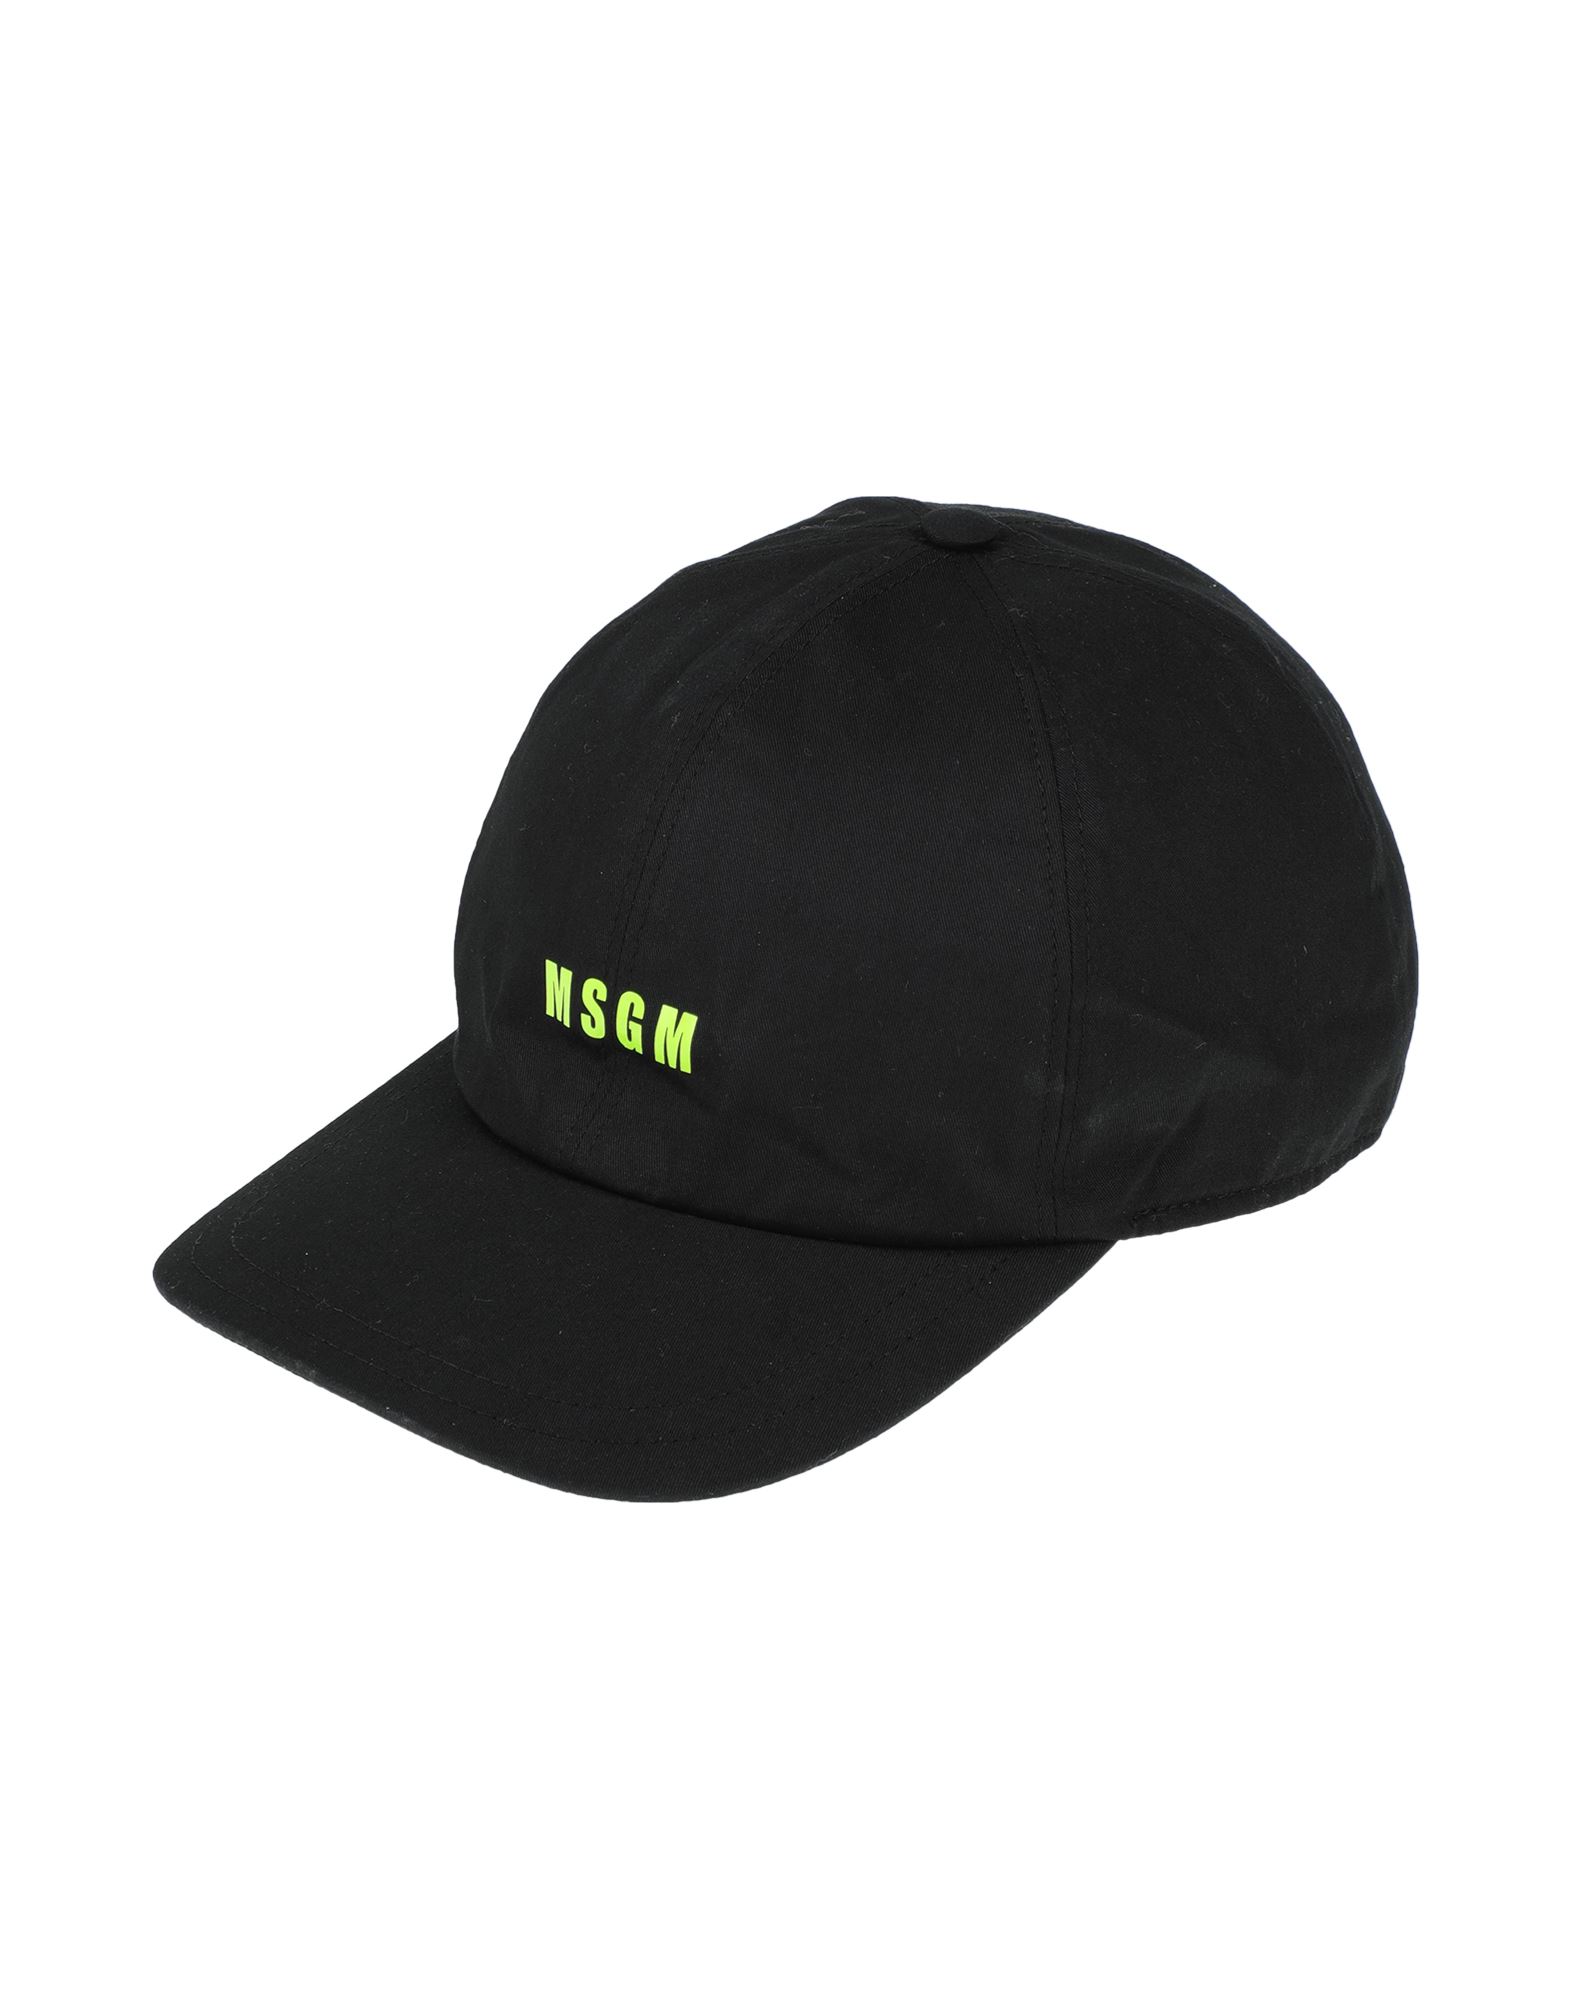 Msgm Men's 3240ml1222726699 Black Other Materials Hat